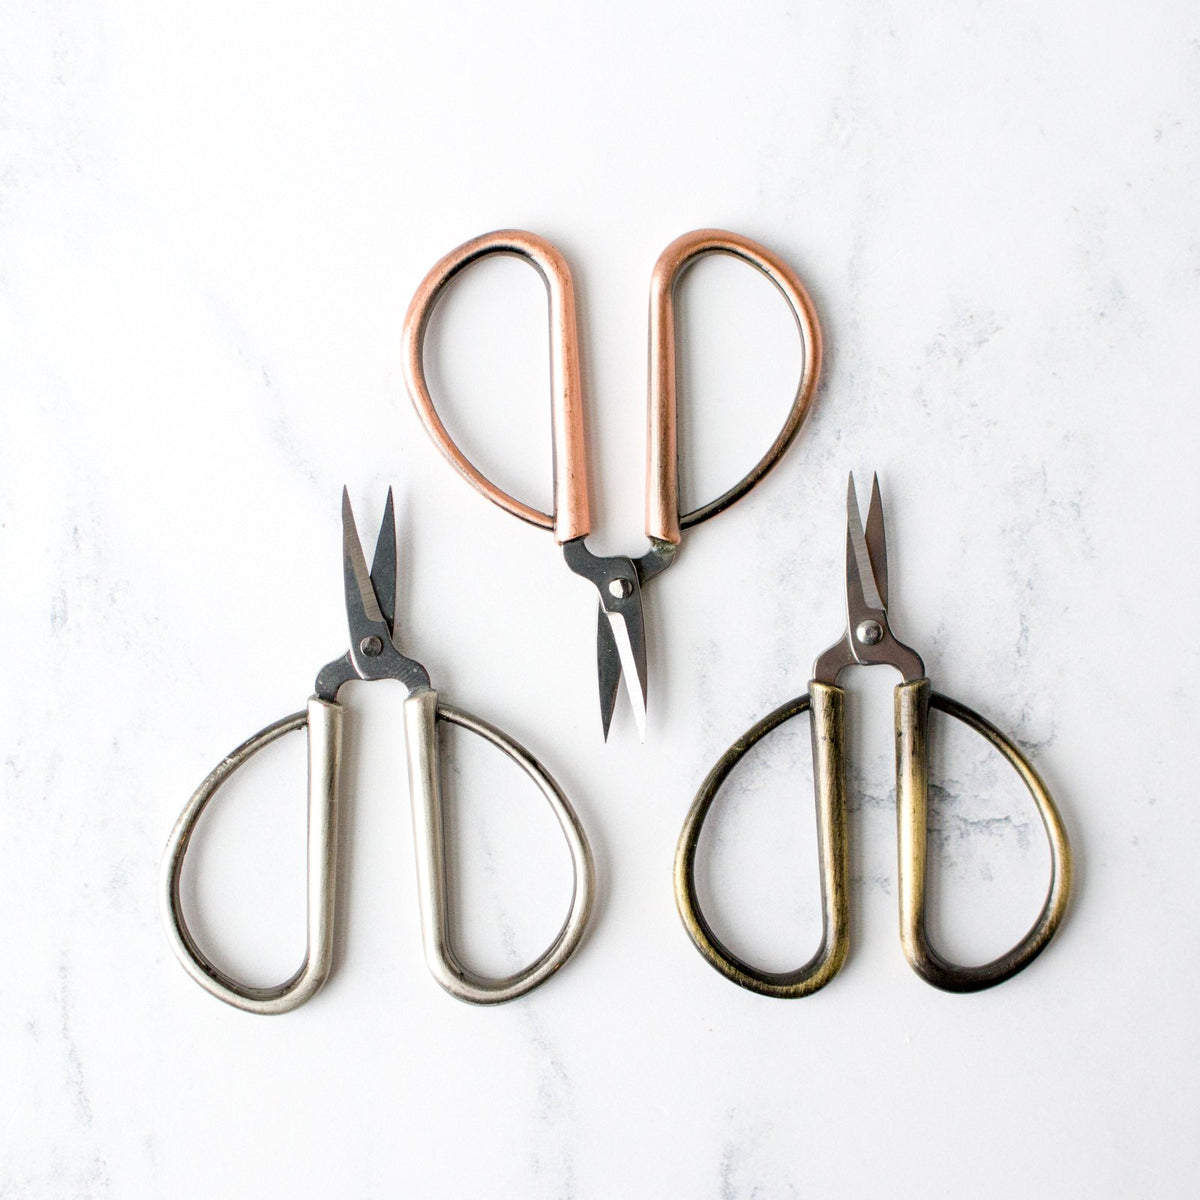 Petite Embroidery Scissors in Copper, Gold, and Silver